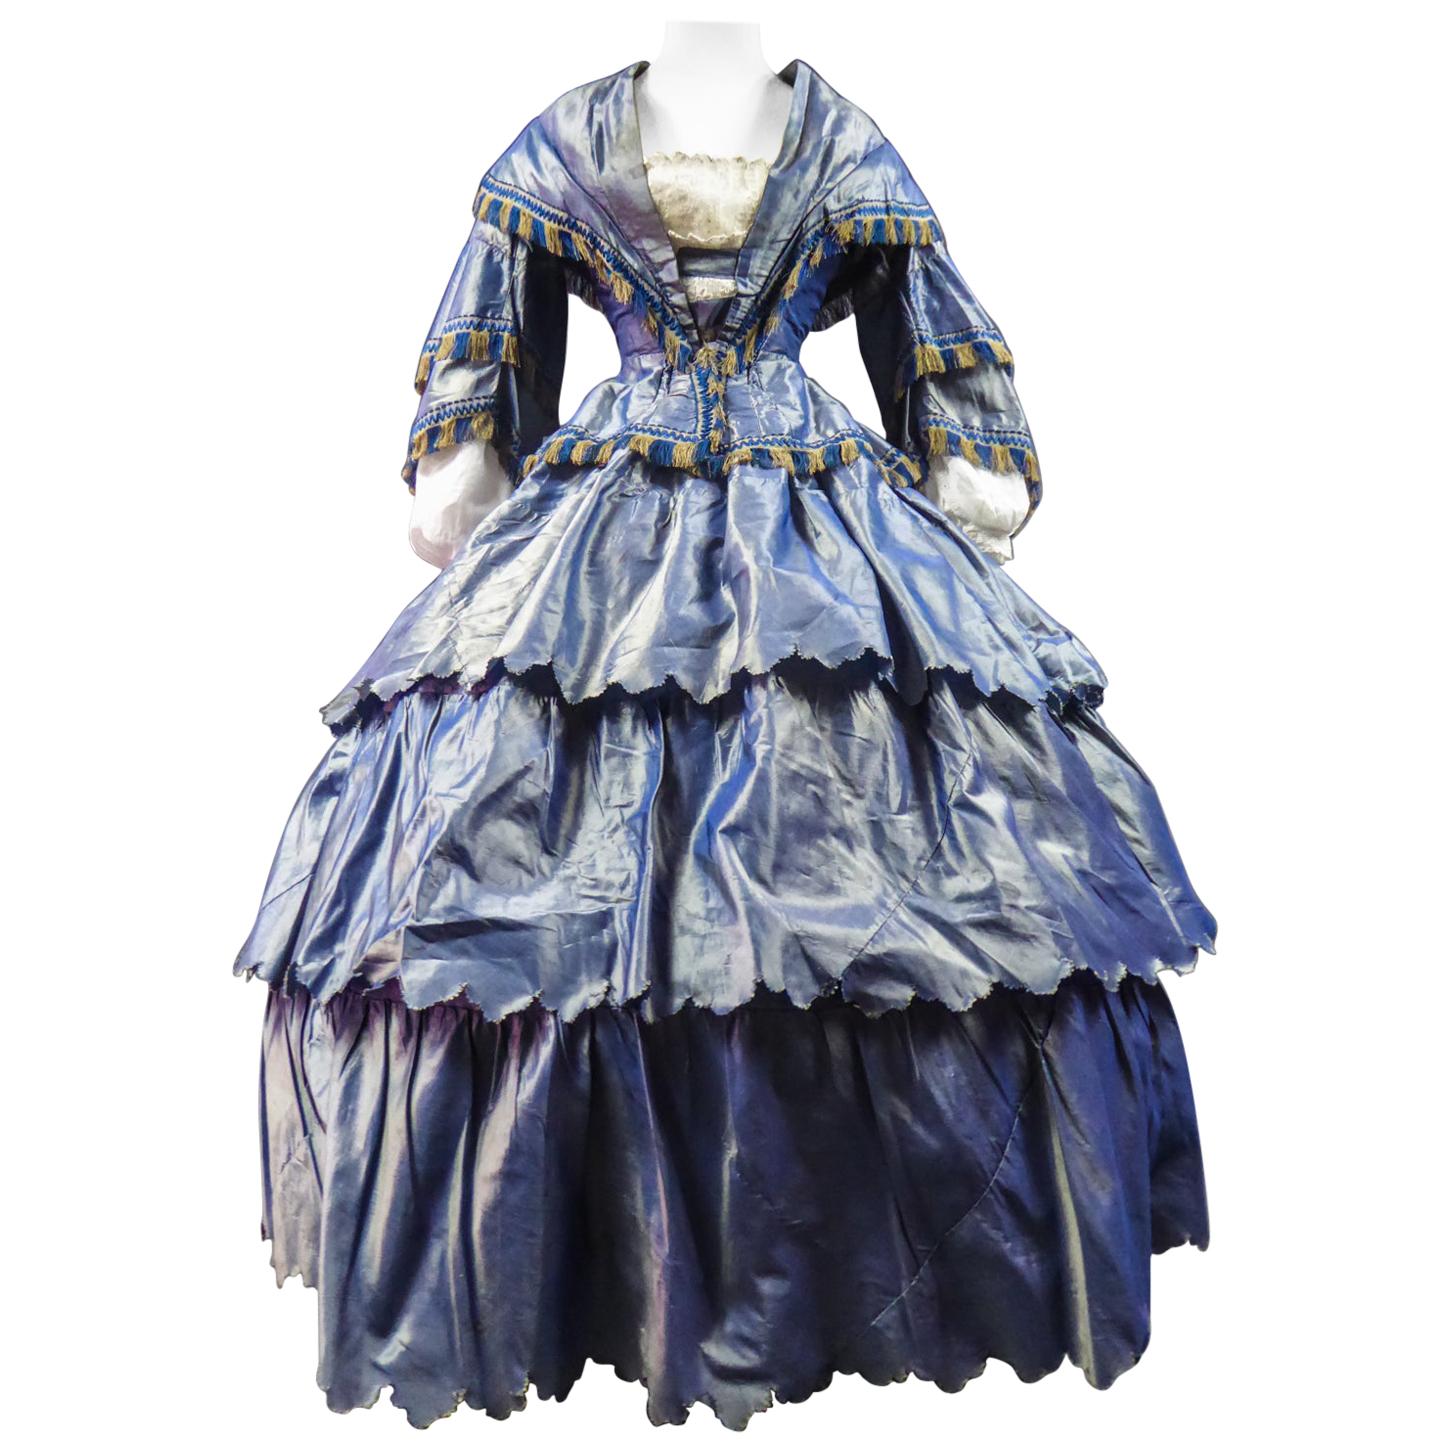 A French Victorian Crinoline Dress with Changing Taffeta Circa 1855.